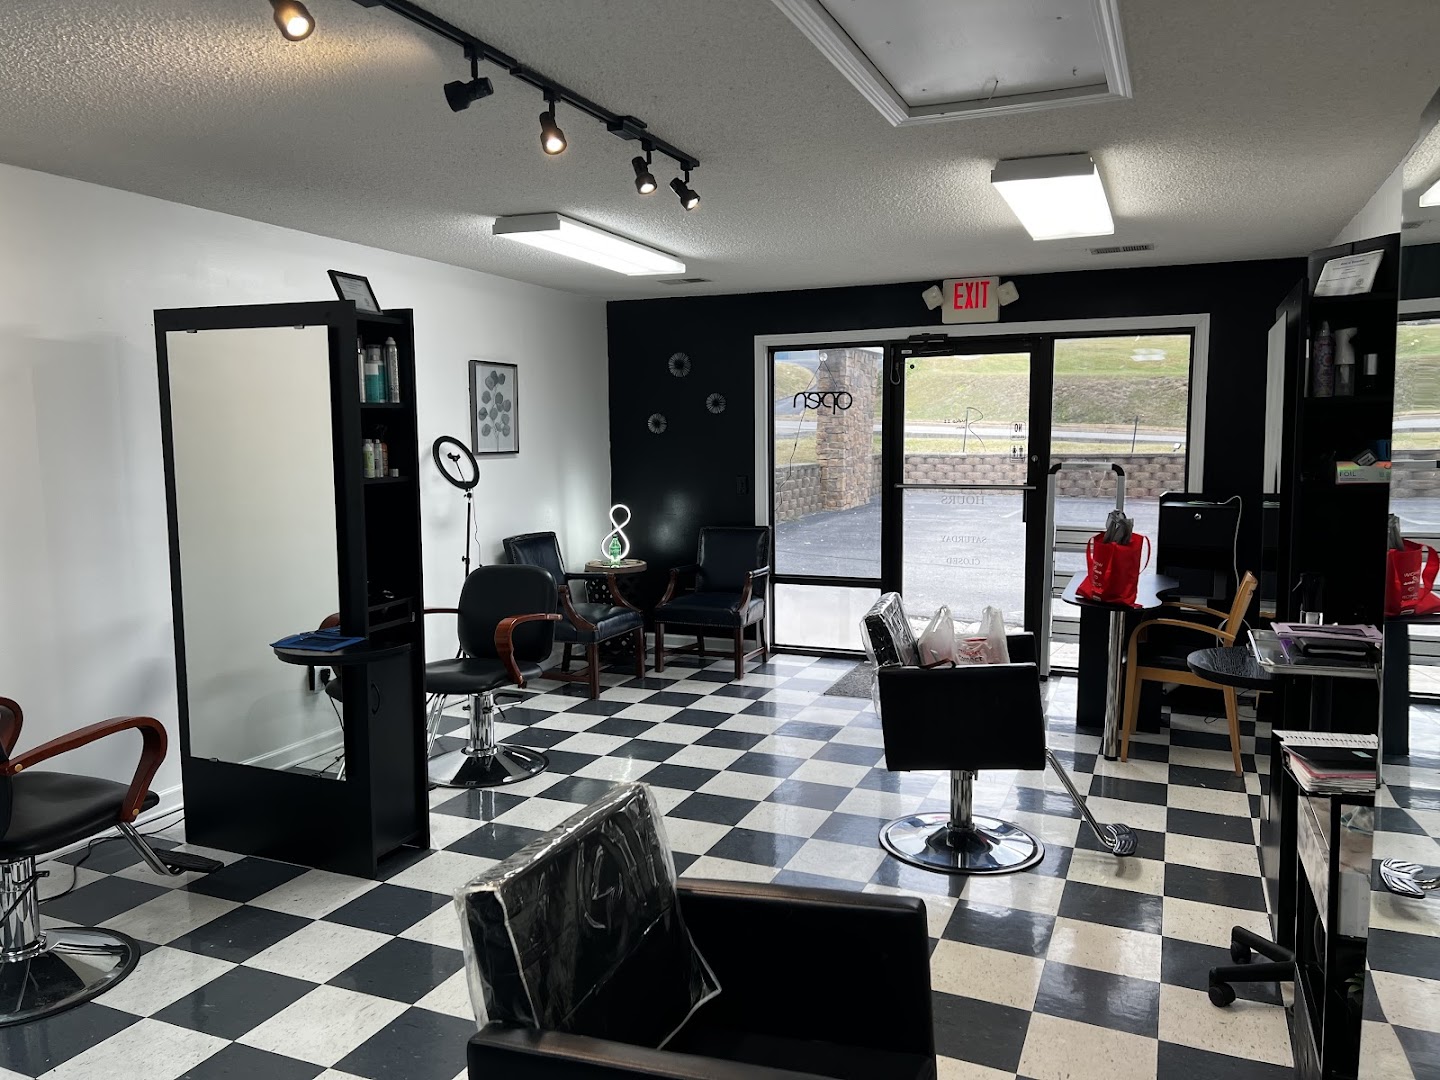 Studio 11 Salon